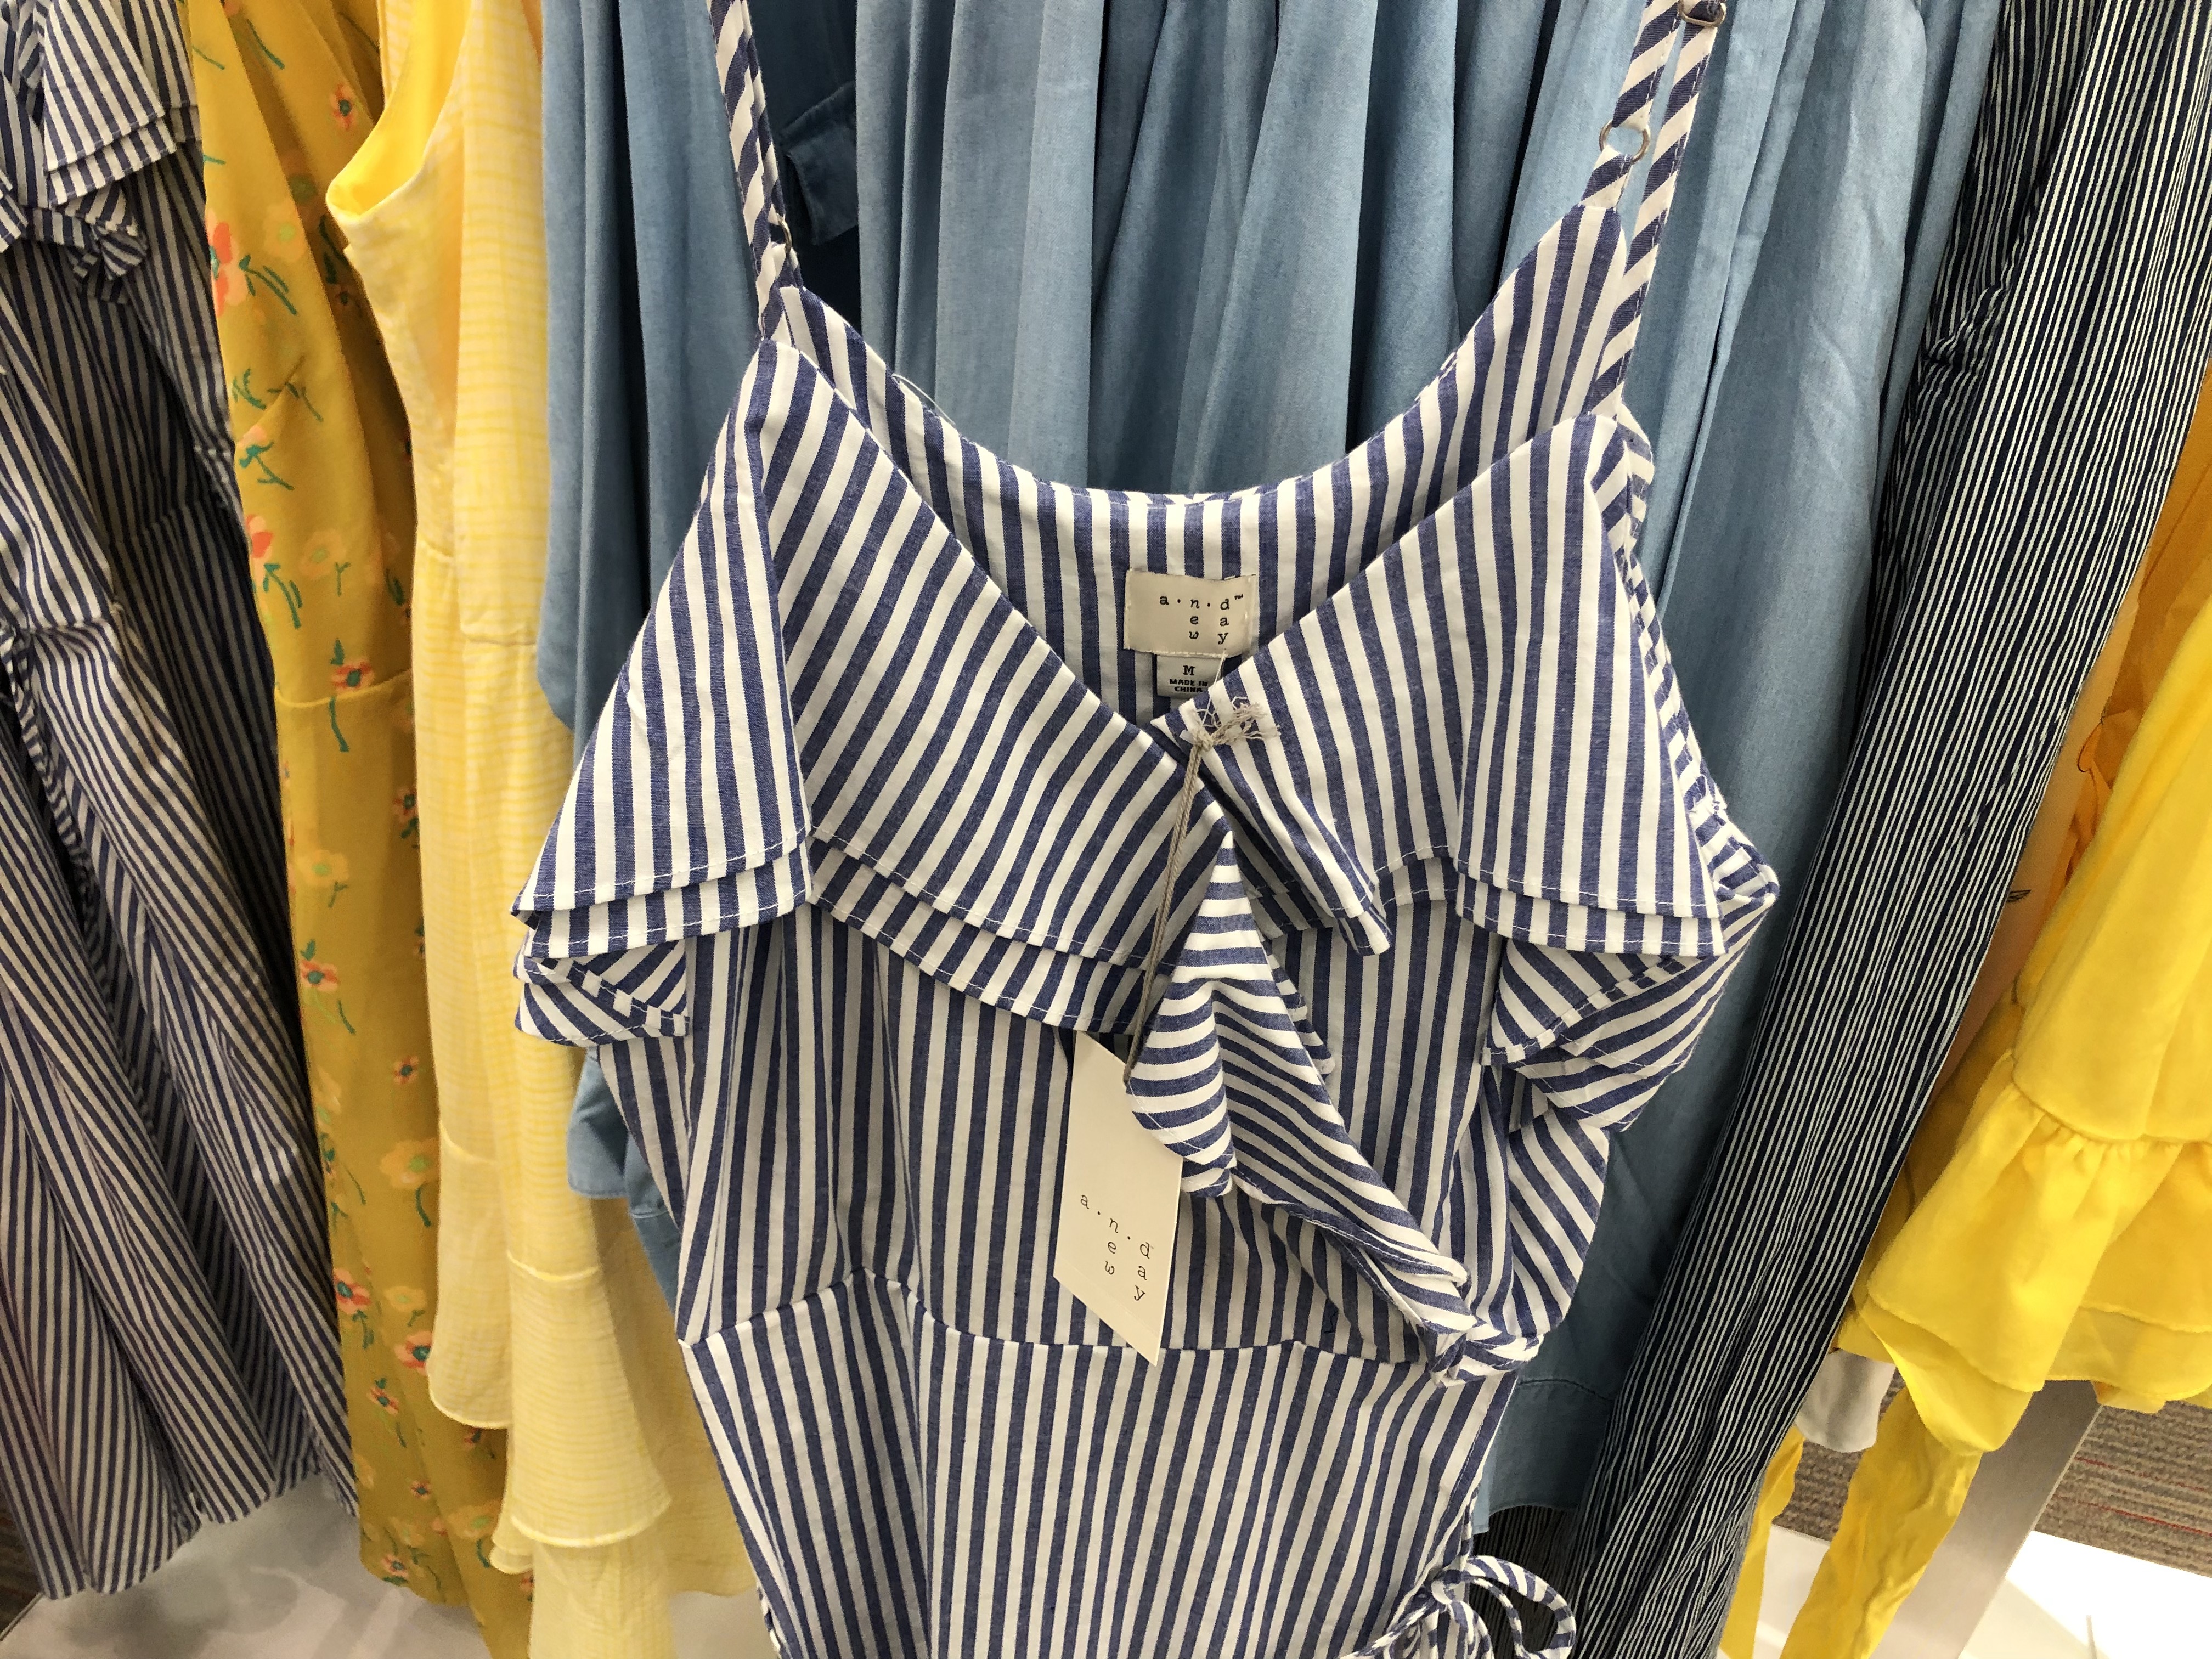 target women's dresses in store